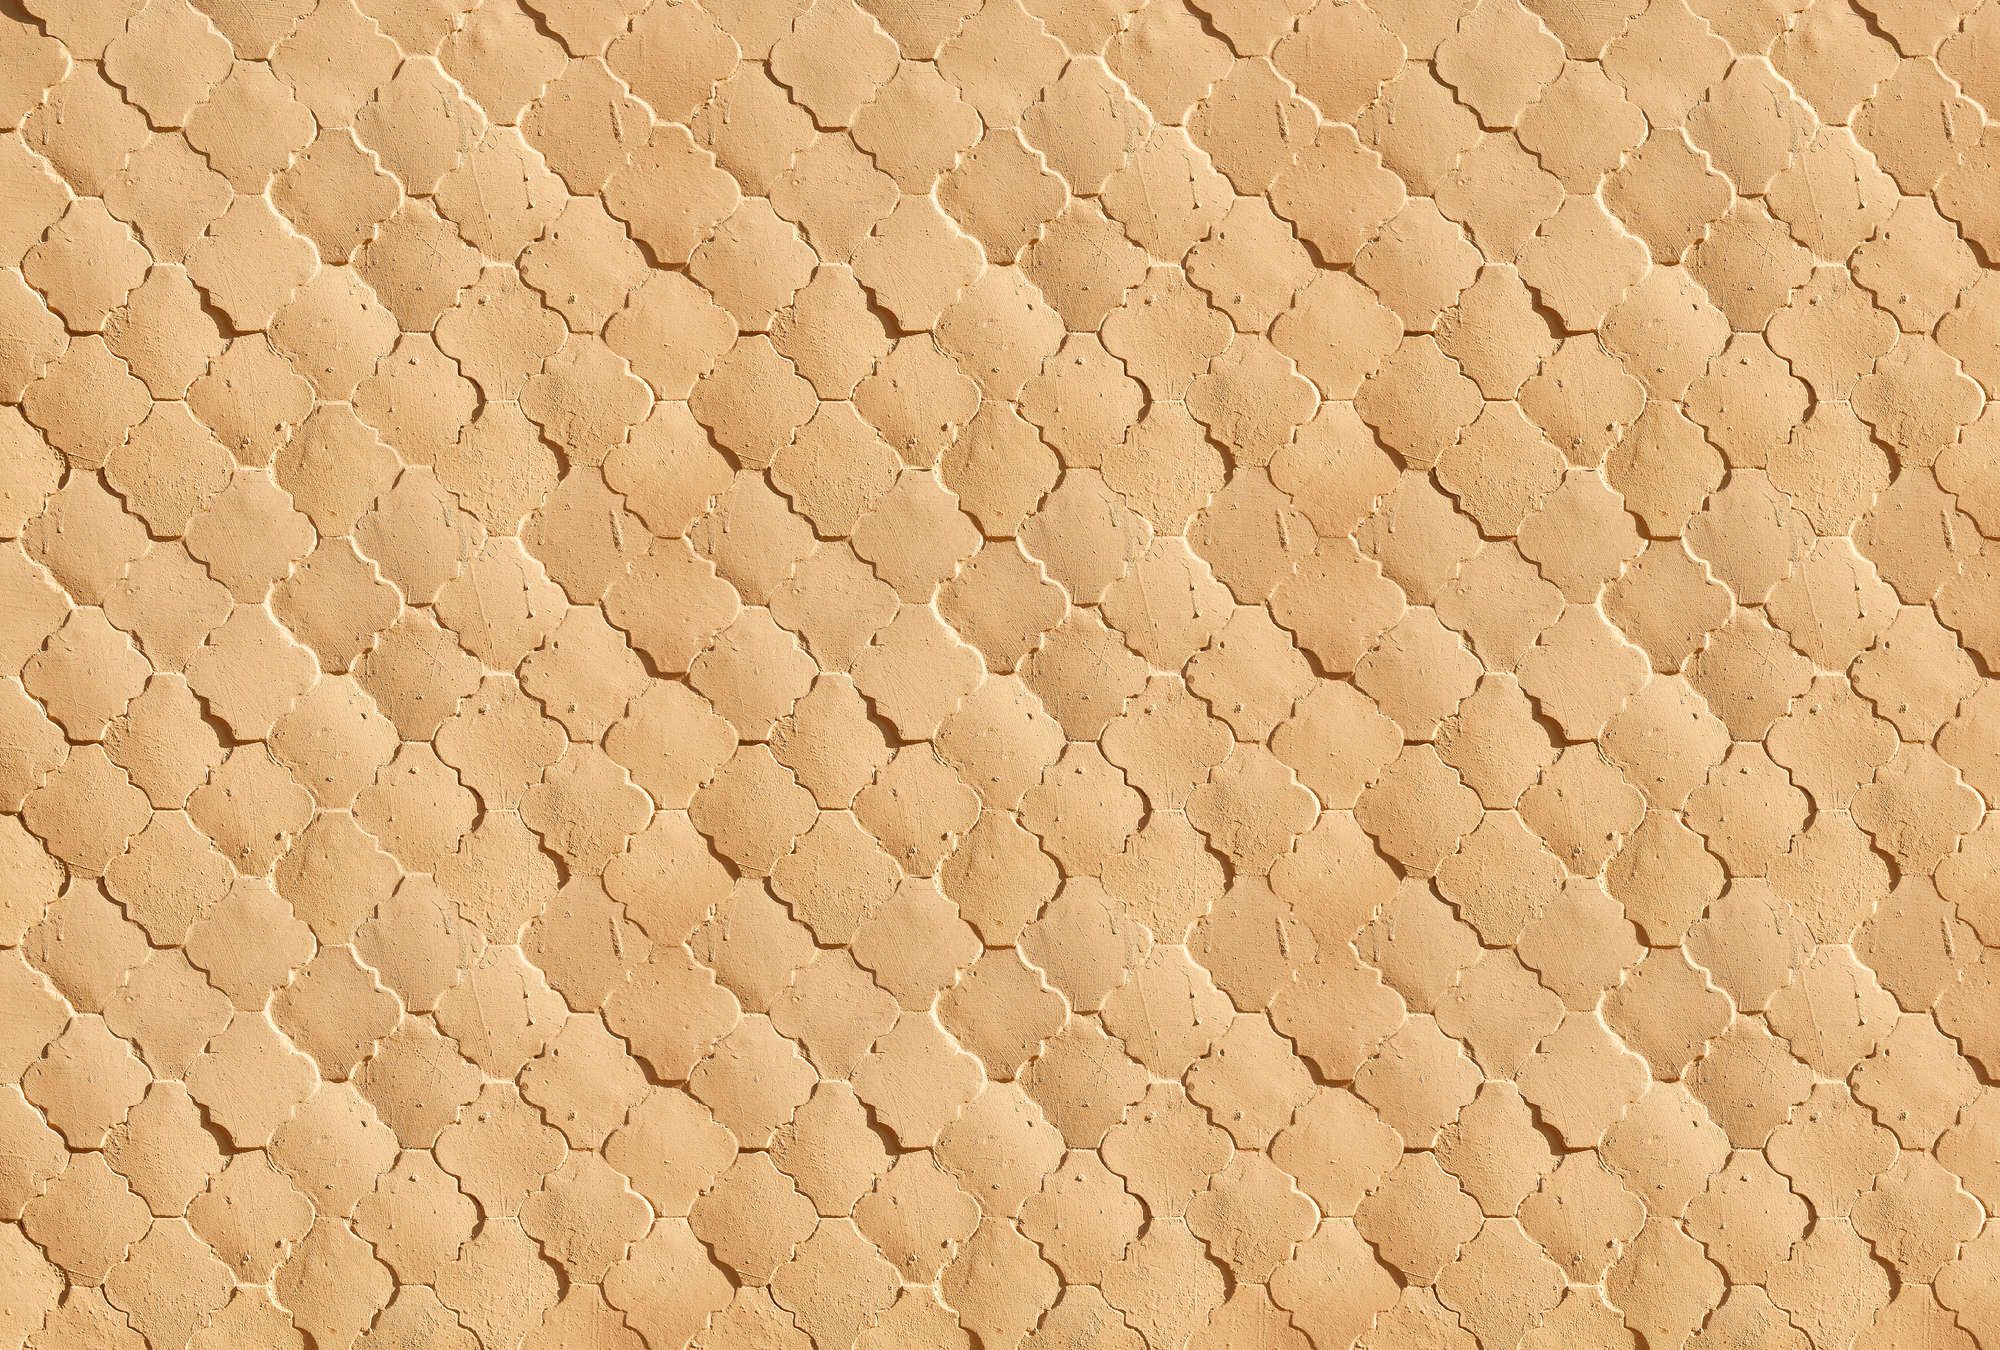             Digital behang »siena« - Mediterraan tegelpatroon in zandkleuren - Matte, gladde vliesstof
        